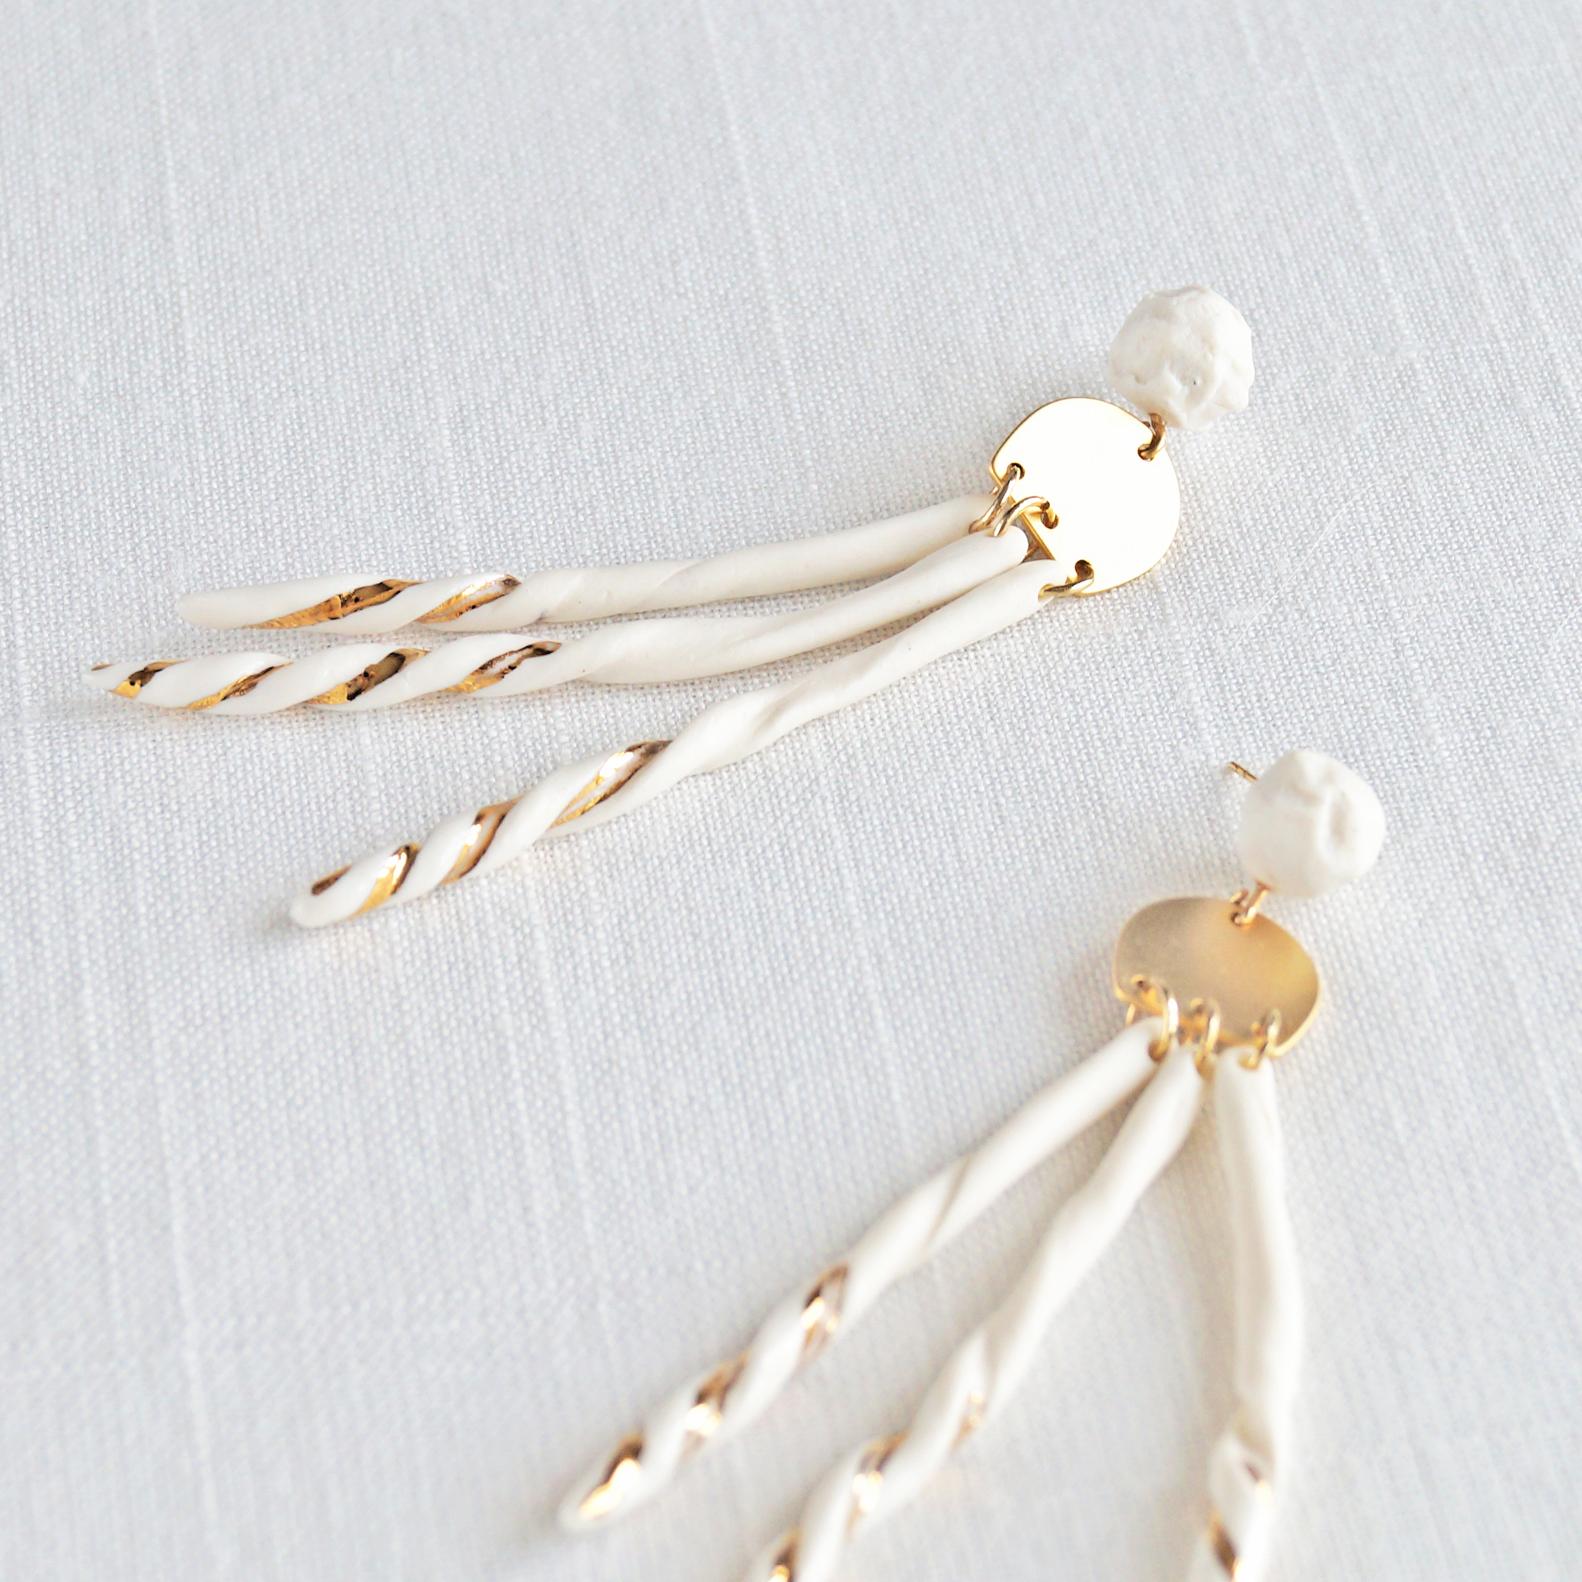 Jelly fish earrings, seaside inspired earrings, gold fill pins, long elegant earrings, white gold earrings, spiral tentacles,